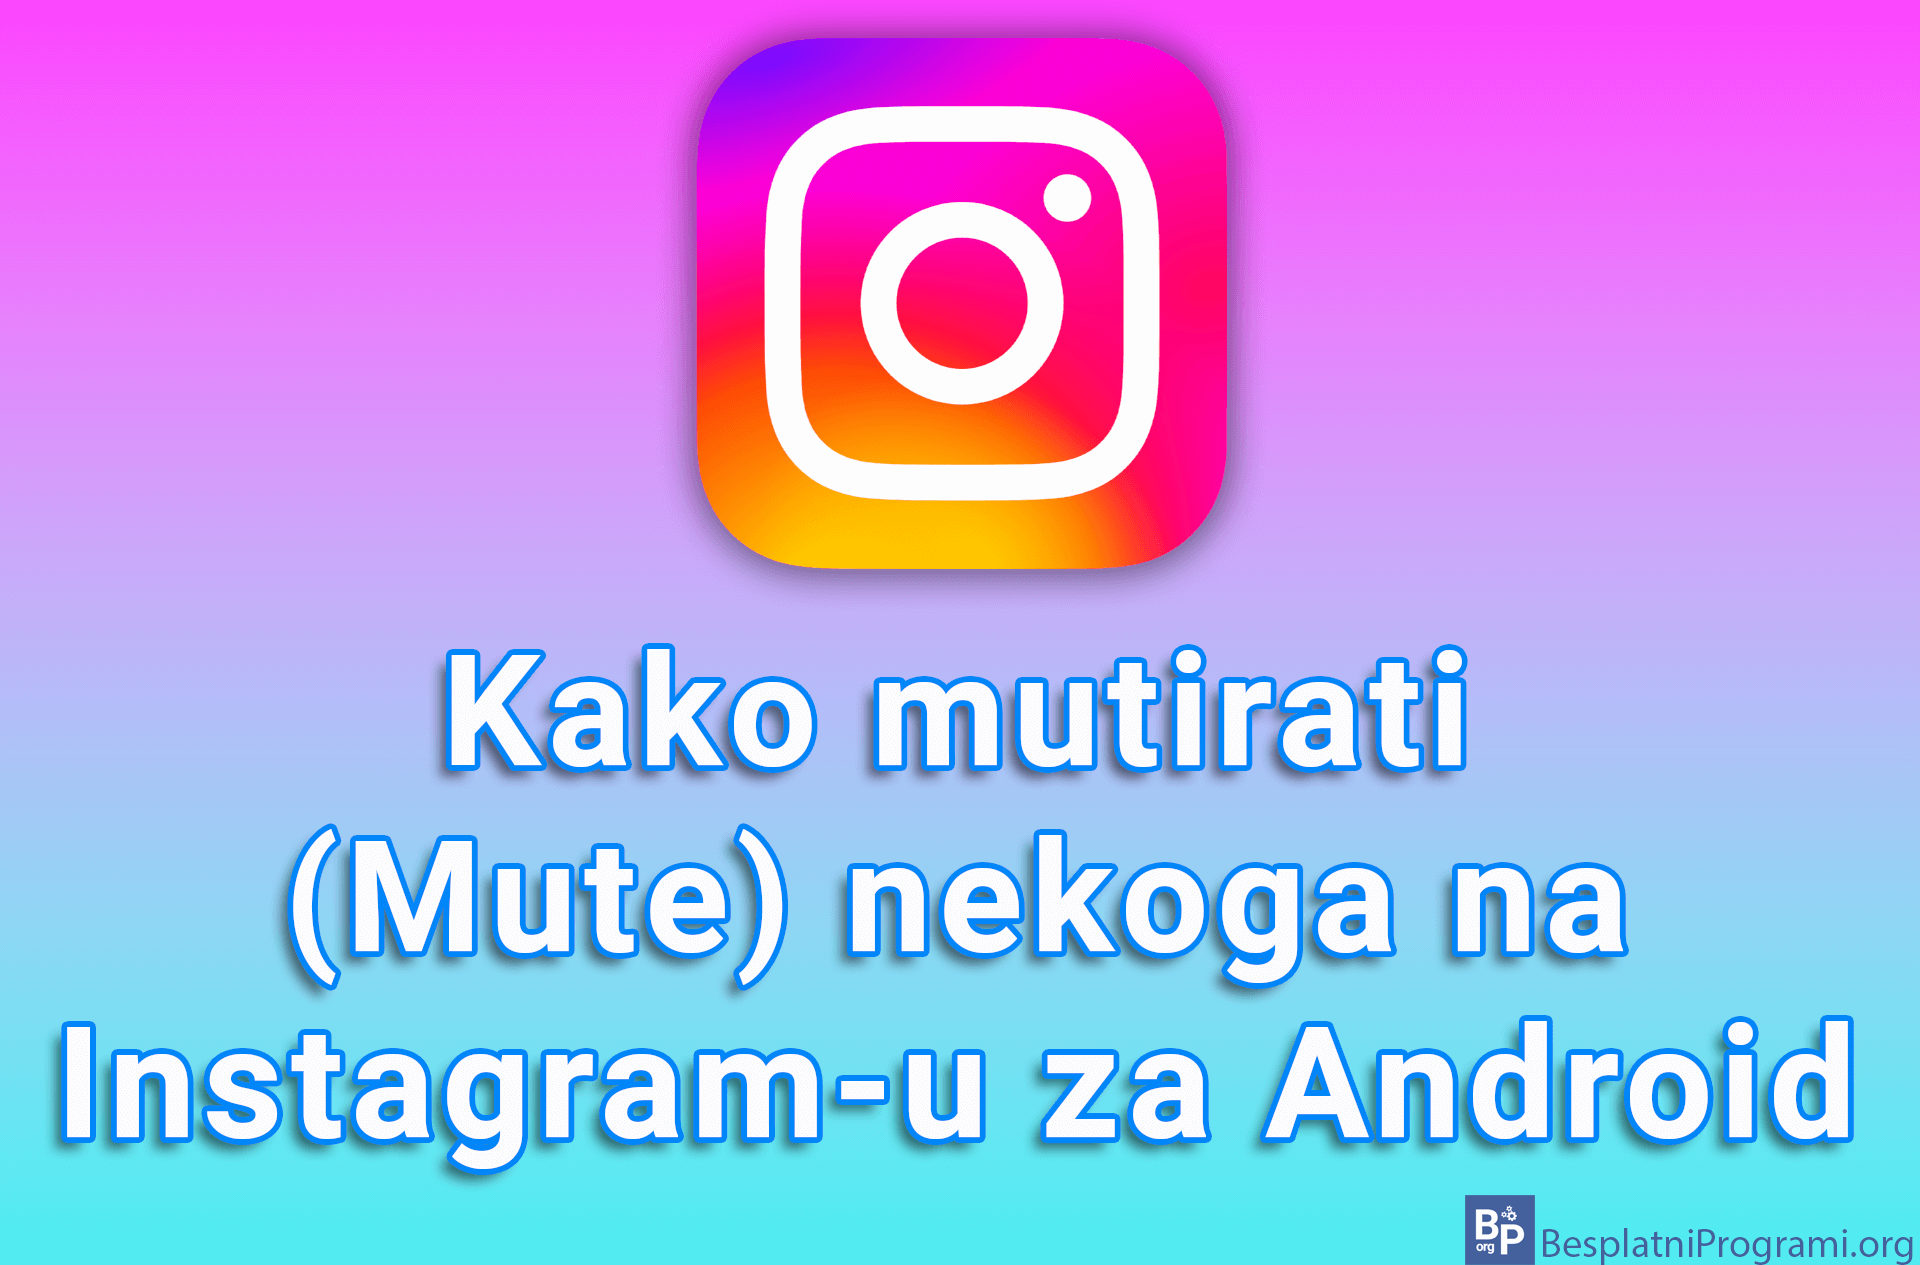 Kako mutirati (Mute) nekoga na Instagram-u za Android